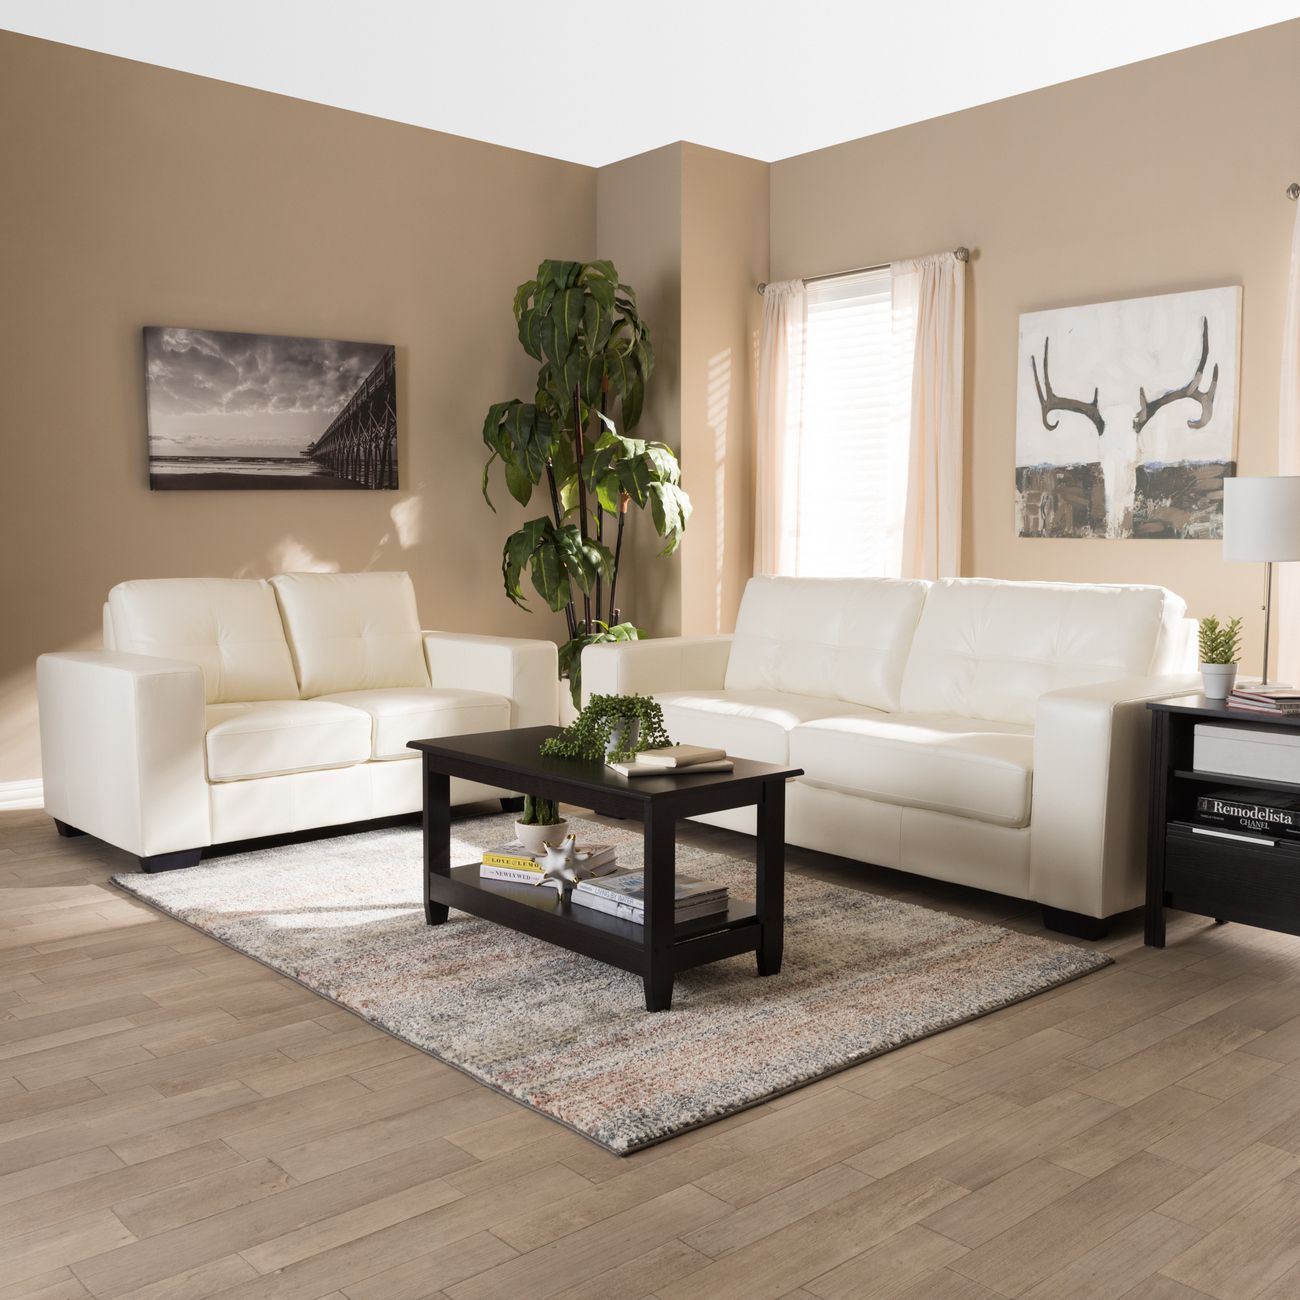 Baxton Studio Adalynn Modern Contemporary White Faux Leather Upholstered 2 Piece Livingroom Set U2470 White 2PC Set